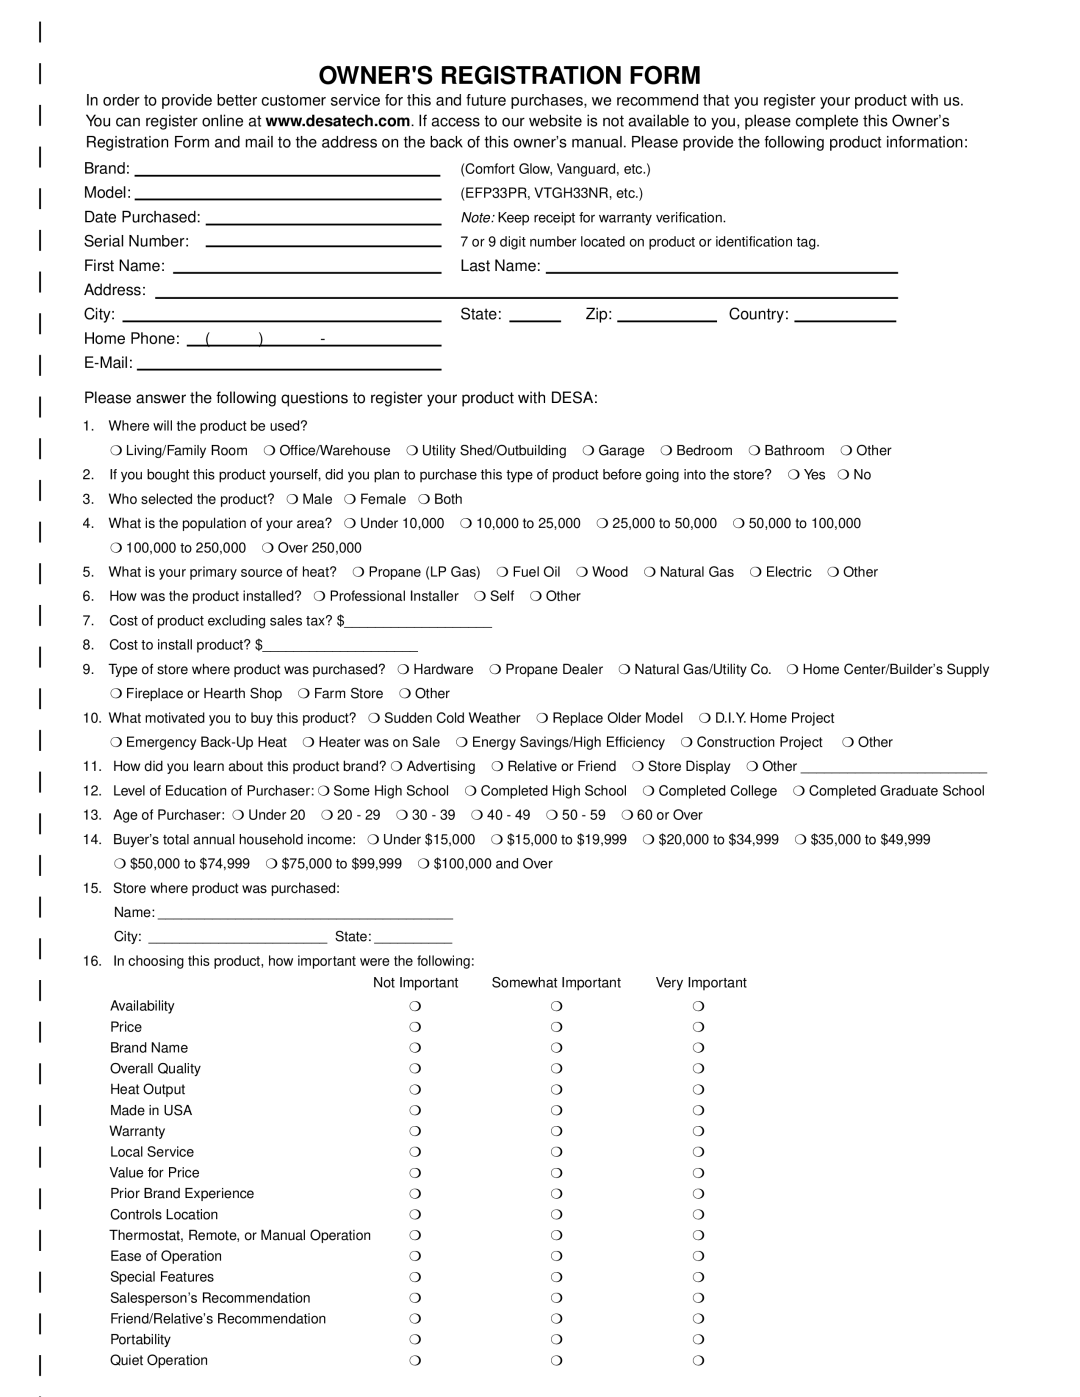 Desa AND VM42 installation manual Owners Registration Form 